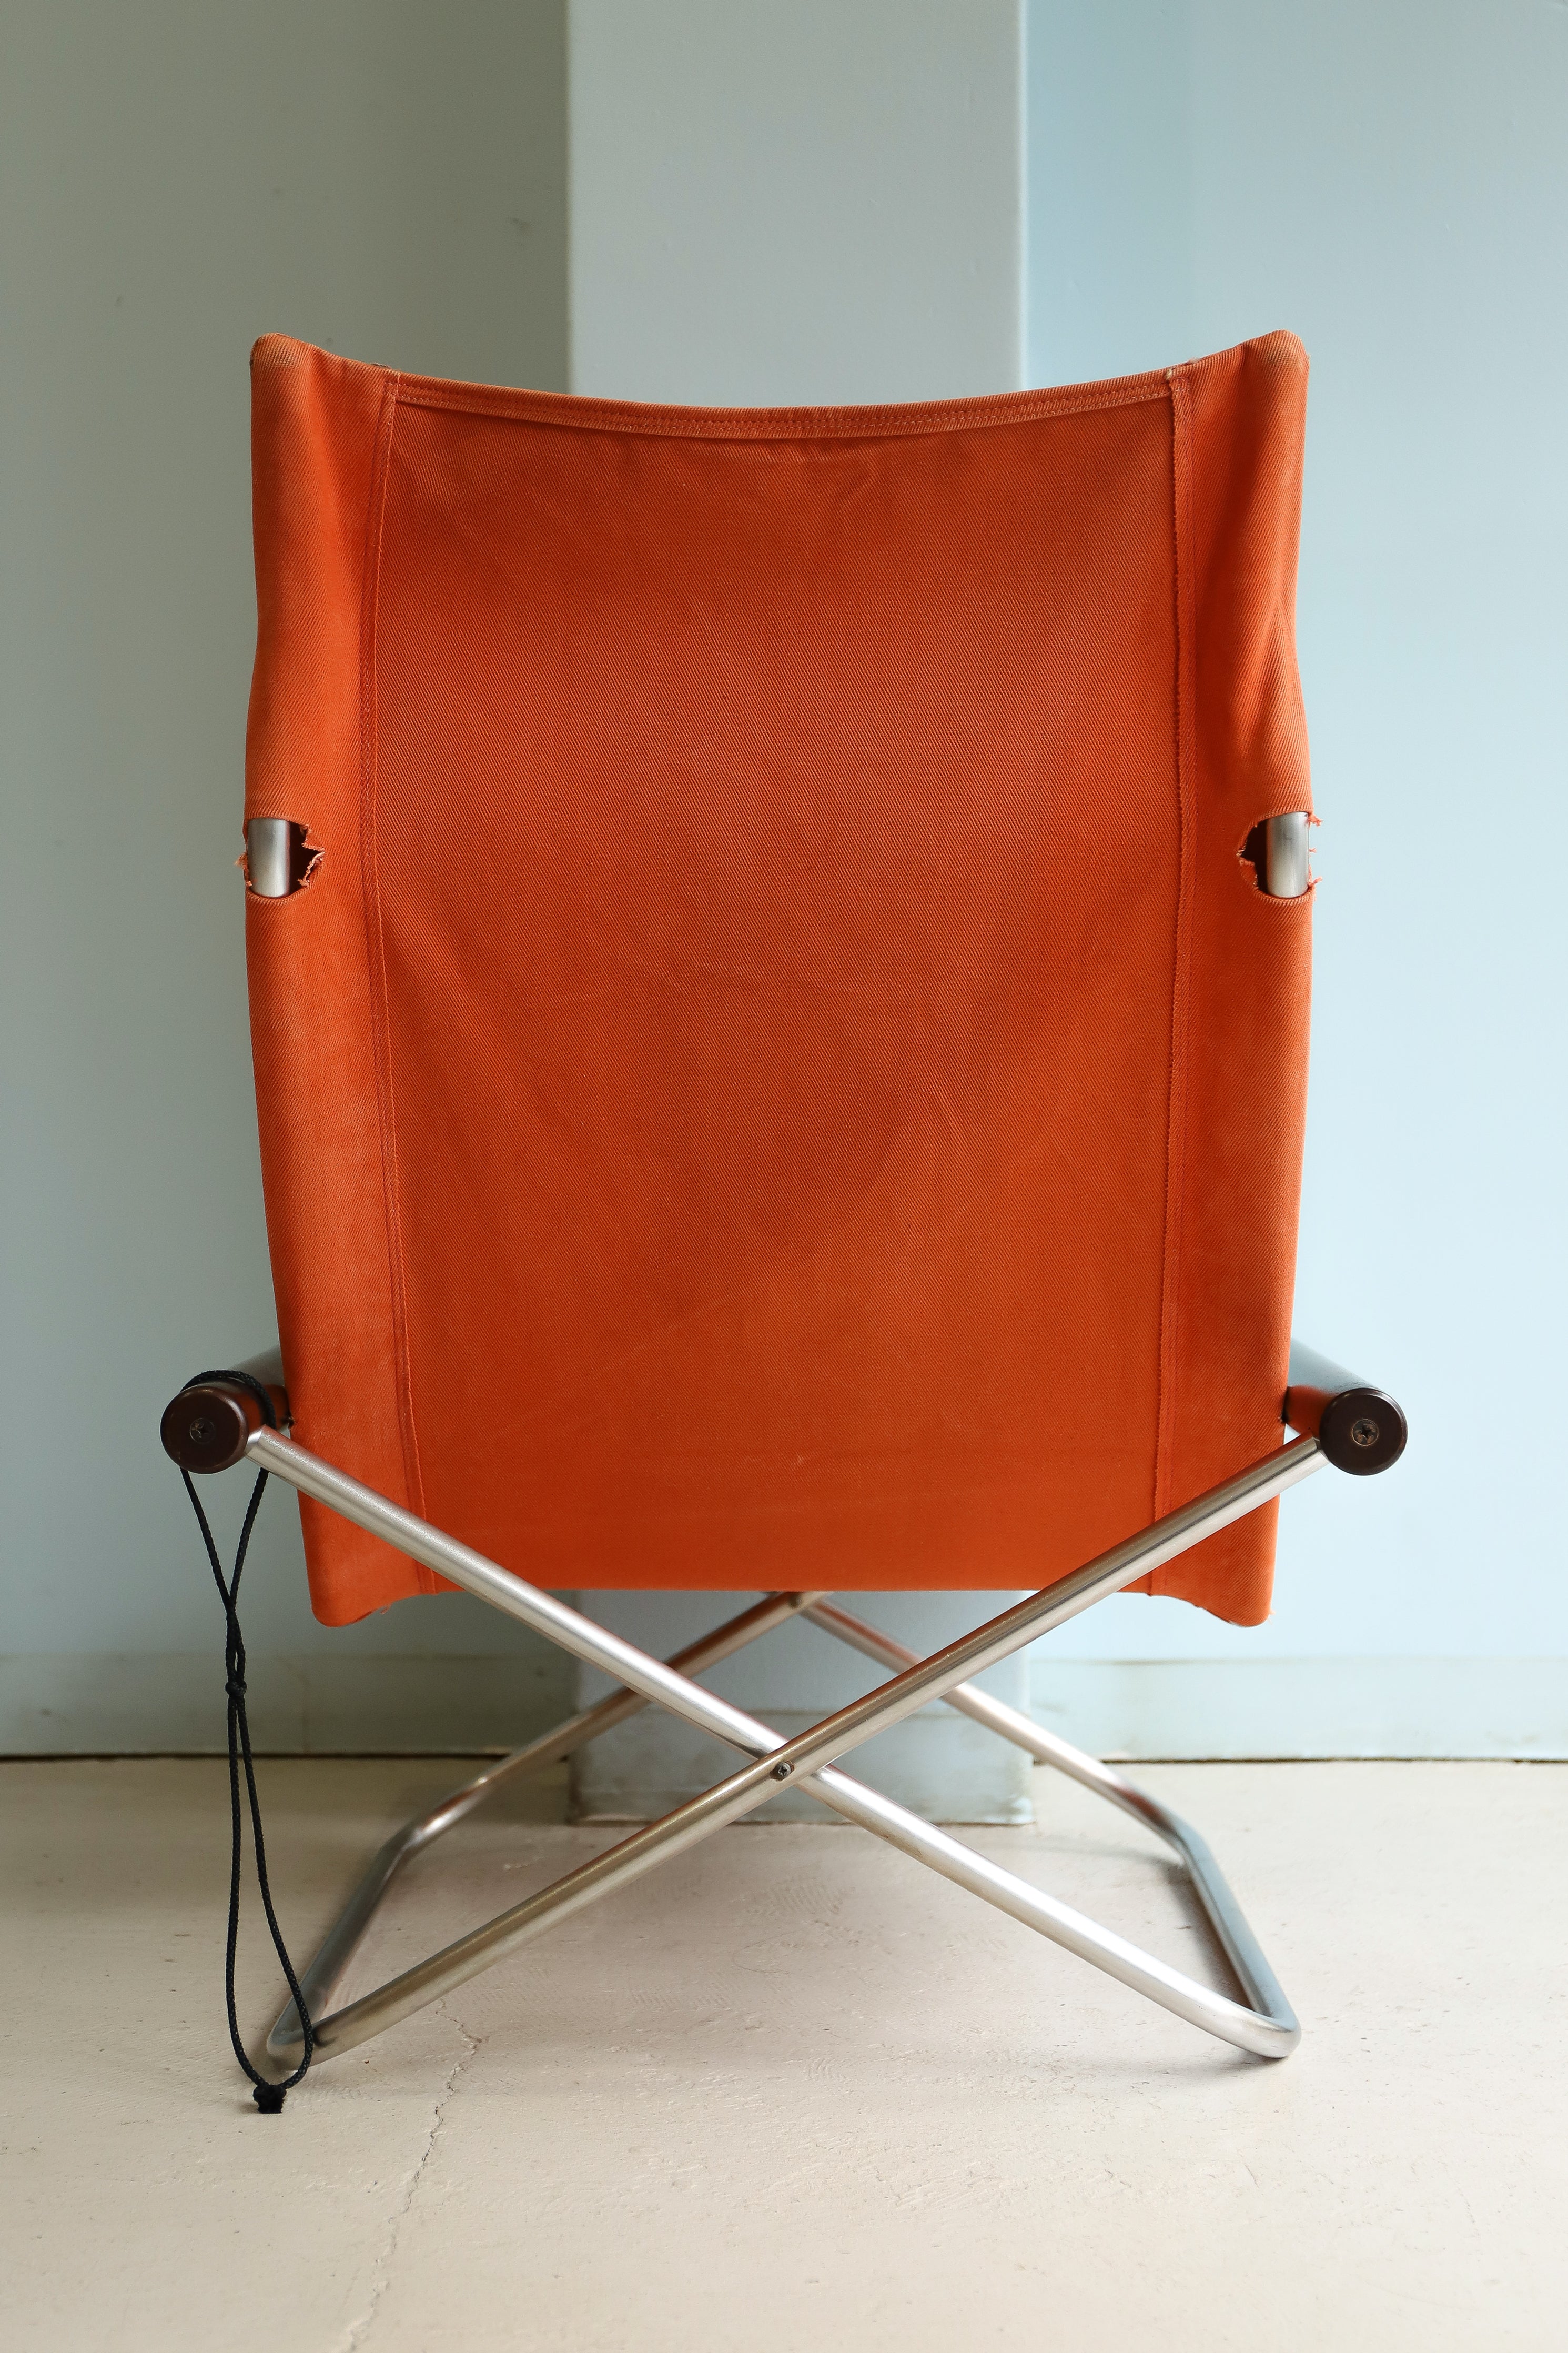 Ny Chair X Folding Personal Chair/ニーチェアエックス 新居猛 折りたたみ パーソナルチェア ラウンジチェア